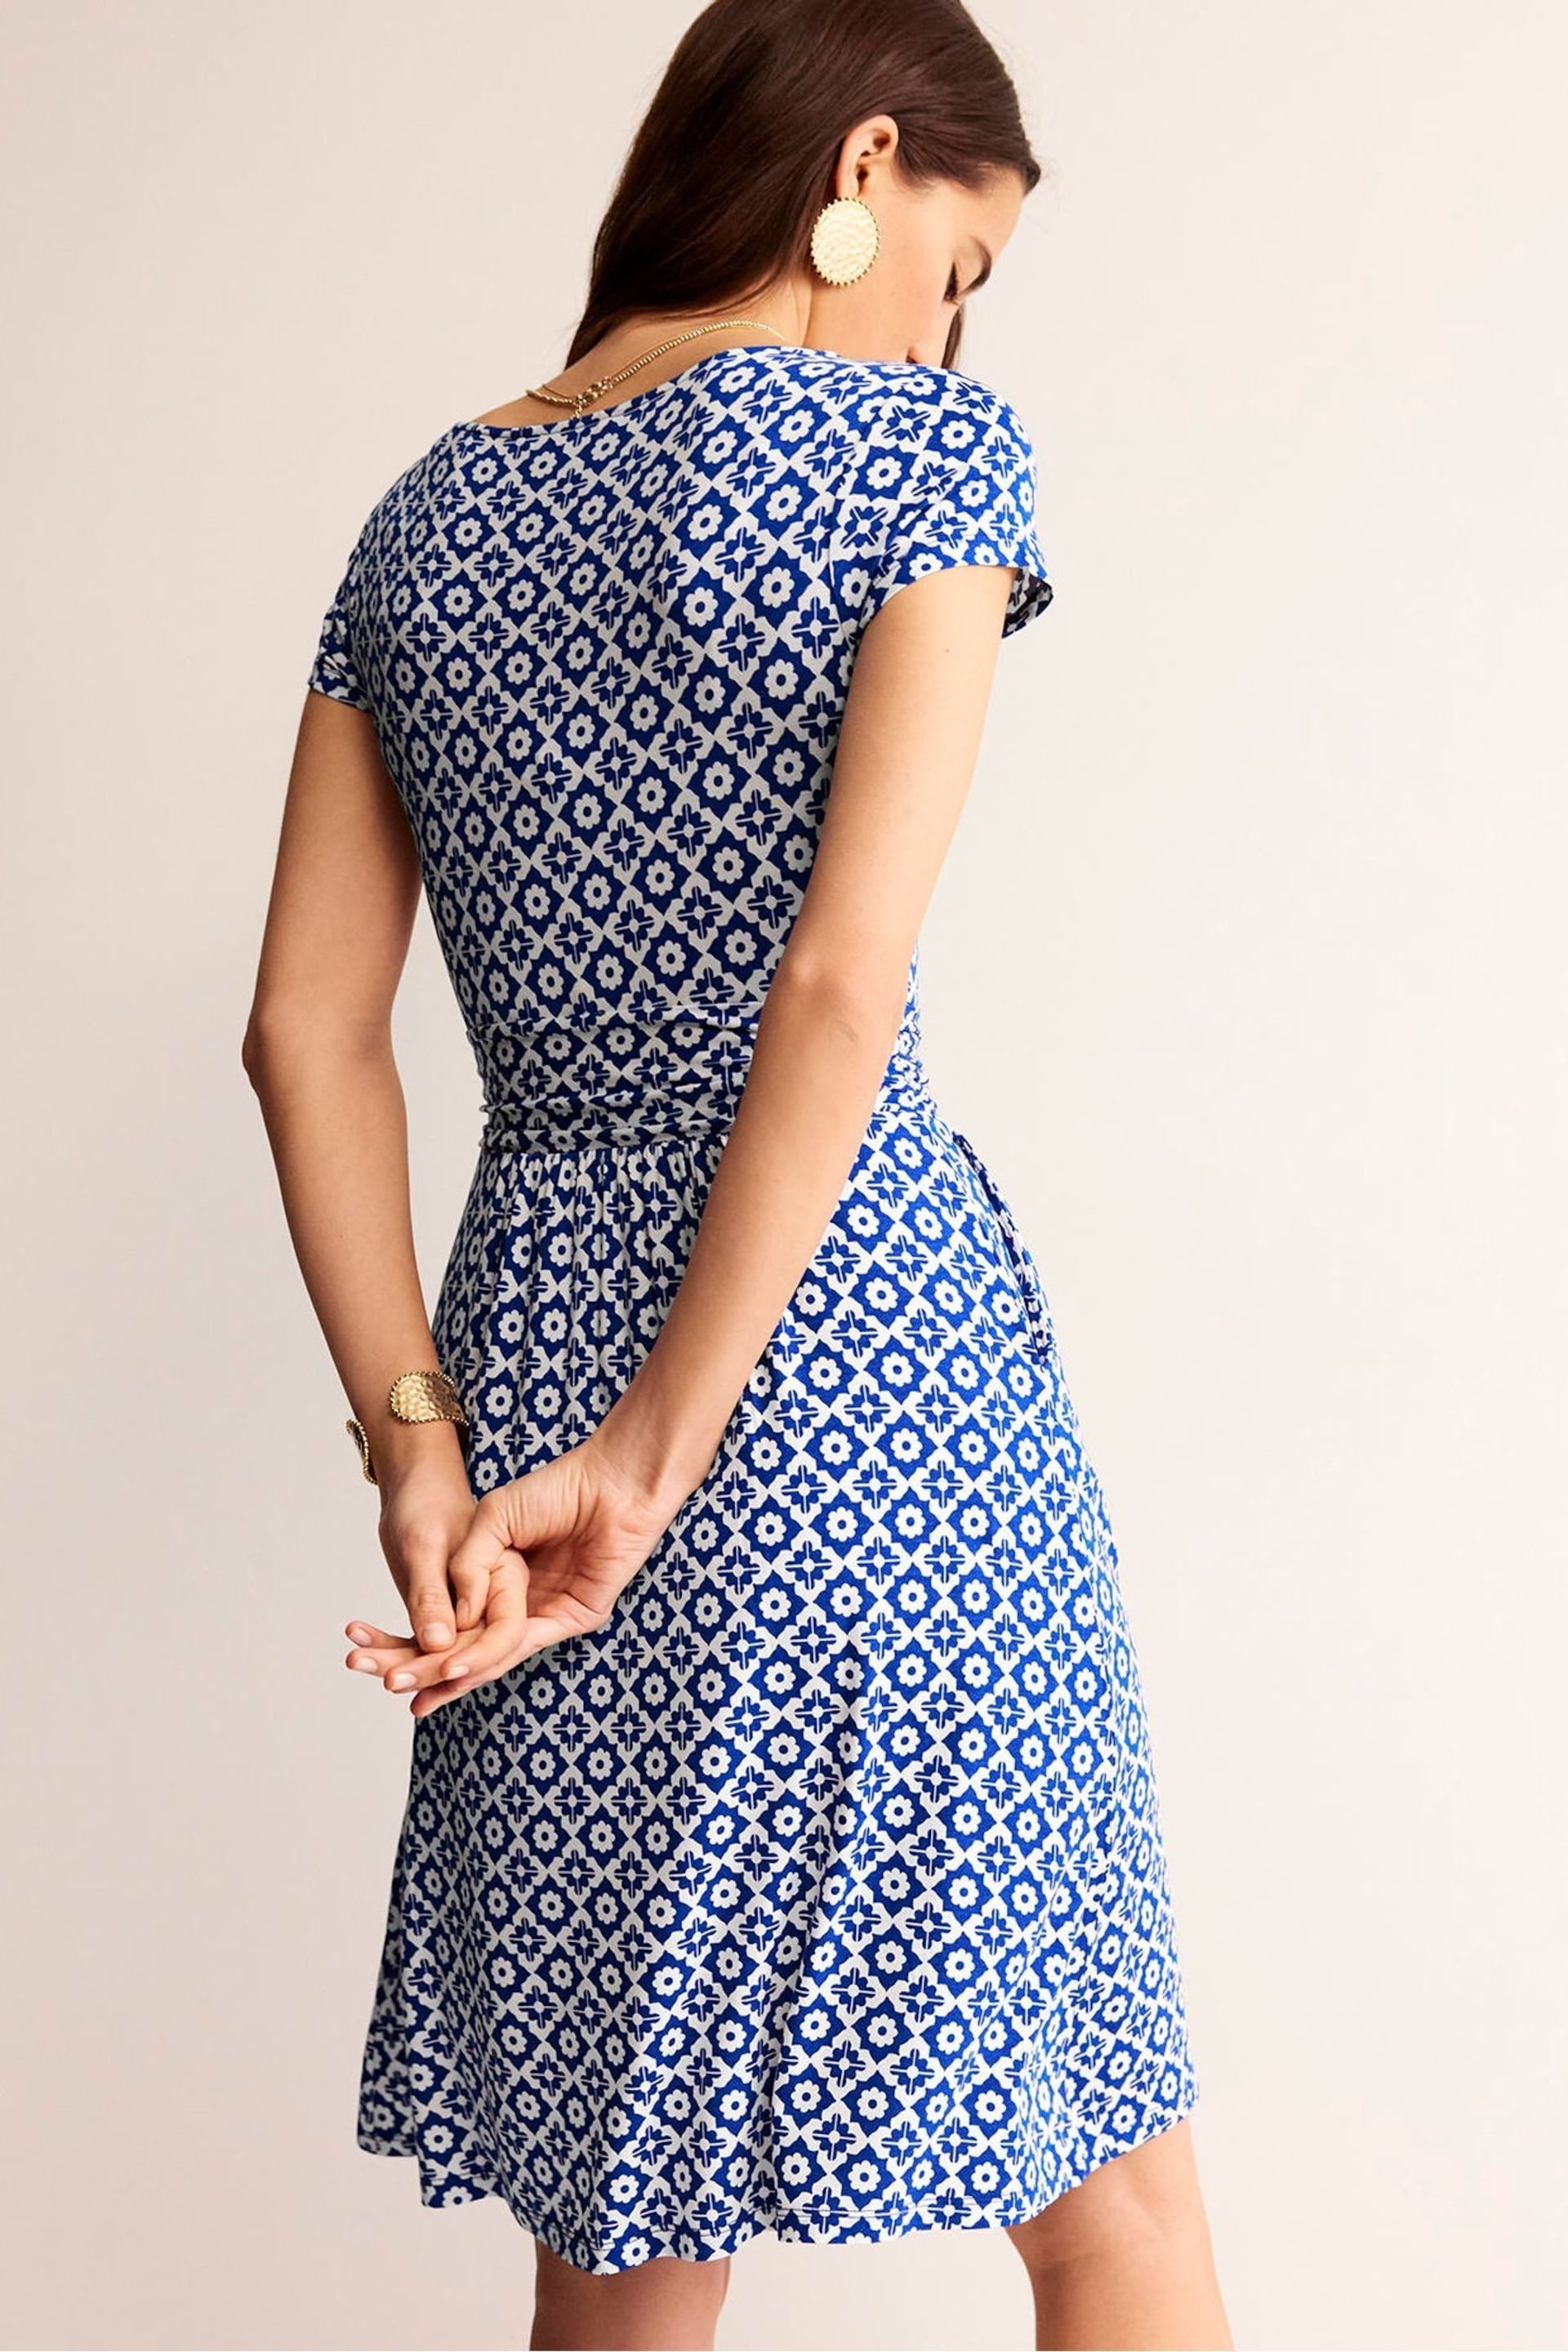 Boden Blue Amelie Jersey Dress - Image 3 of 5